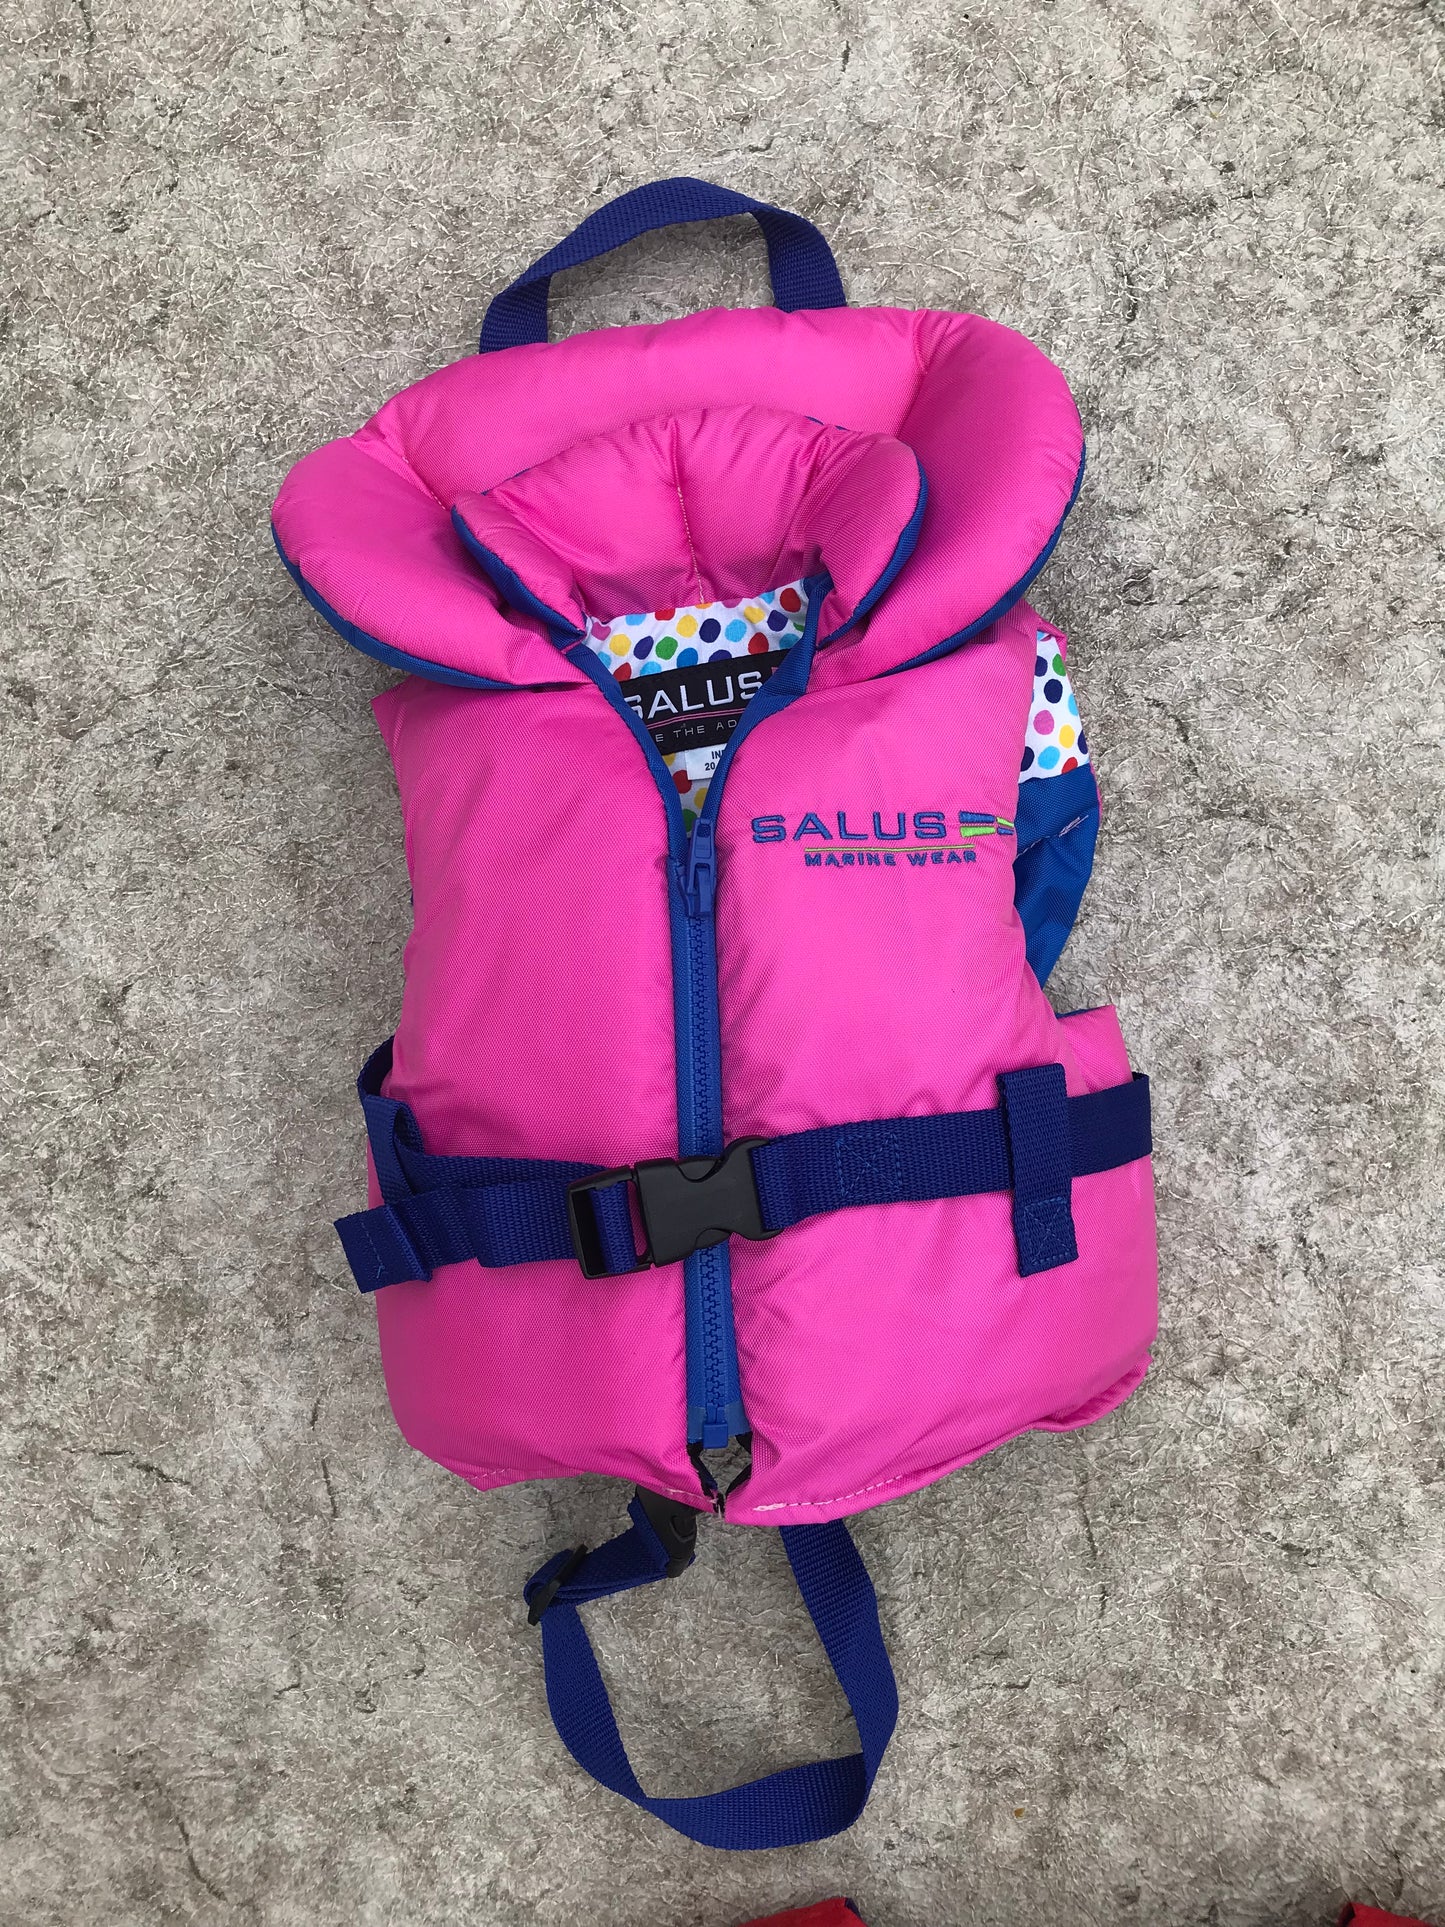 Life Jacket Child Size 20-30 lb Infant Salus Marine Wear Double Head Rest Pink Blue New Demo Model